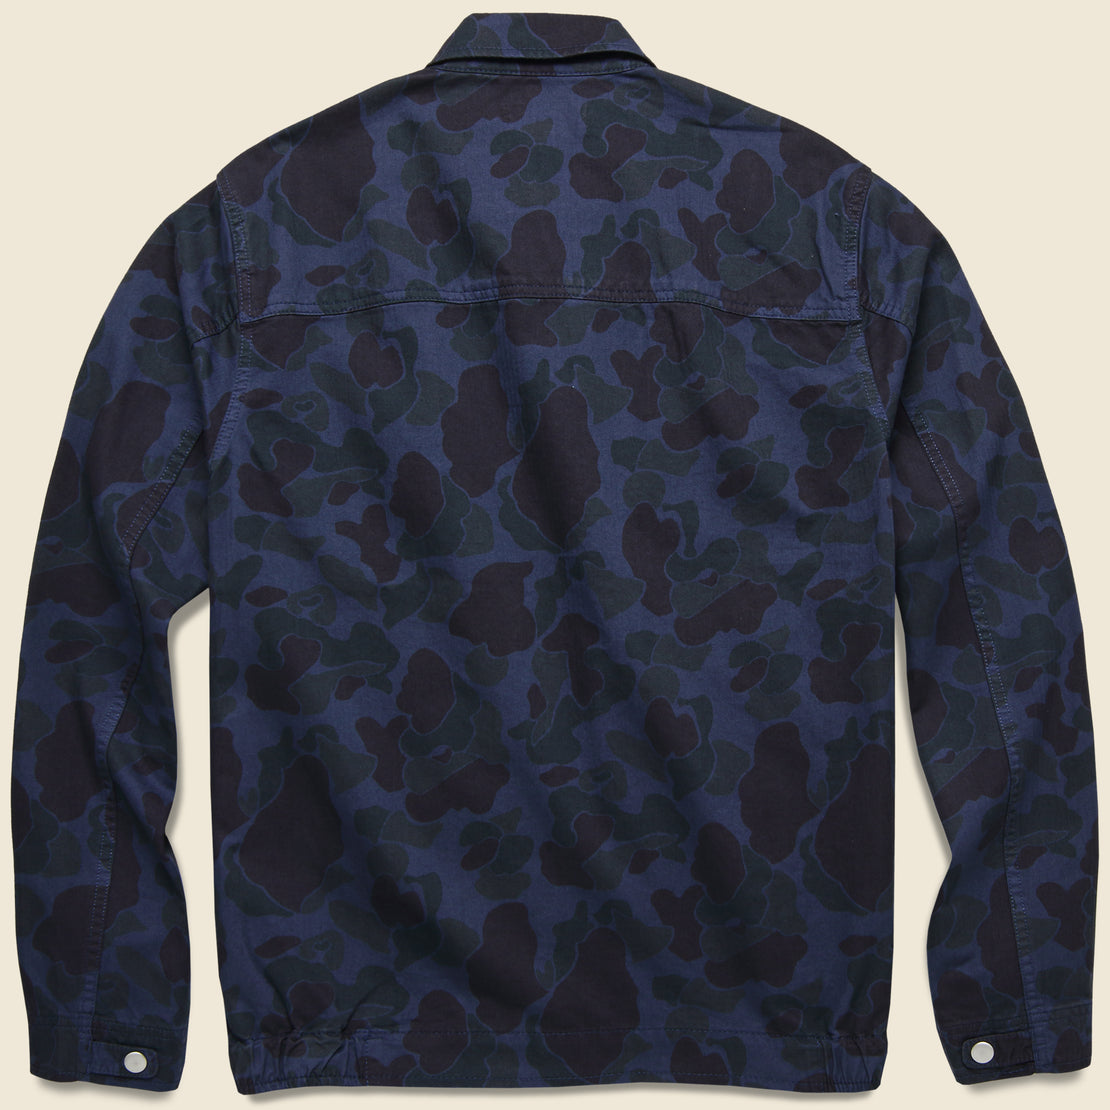 Herringbone Camo Zip Jacket - Navy - Alex Mill - STAG Provisions - Outerwear - Coat / Jacket